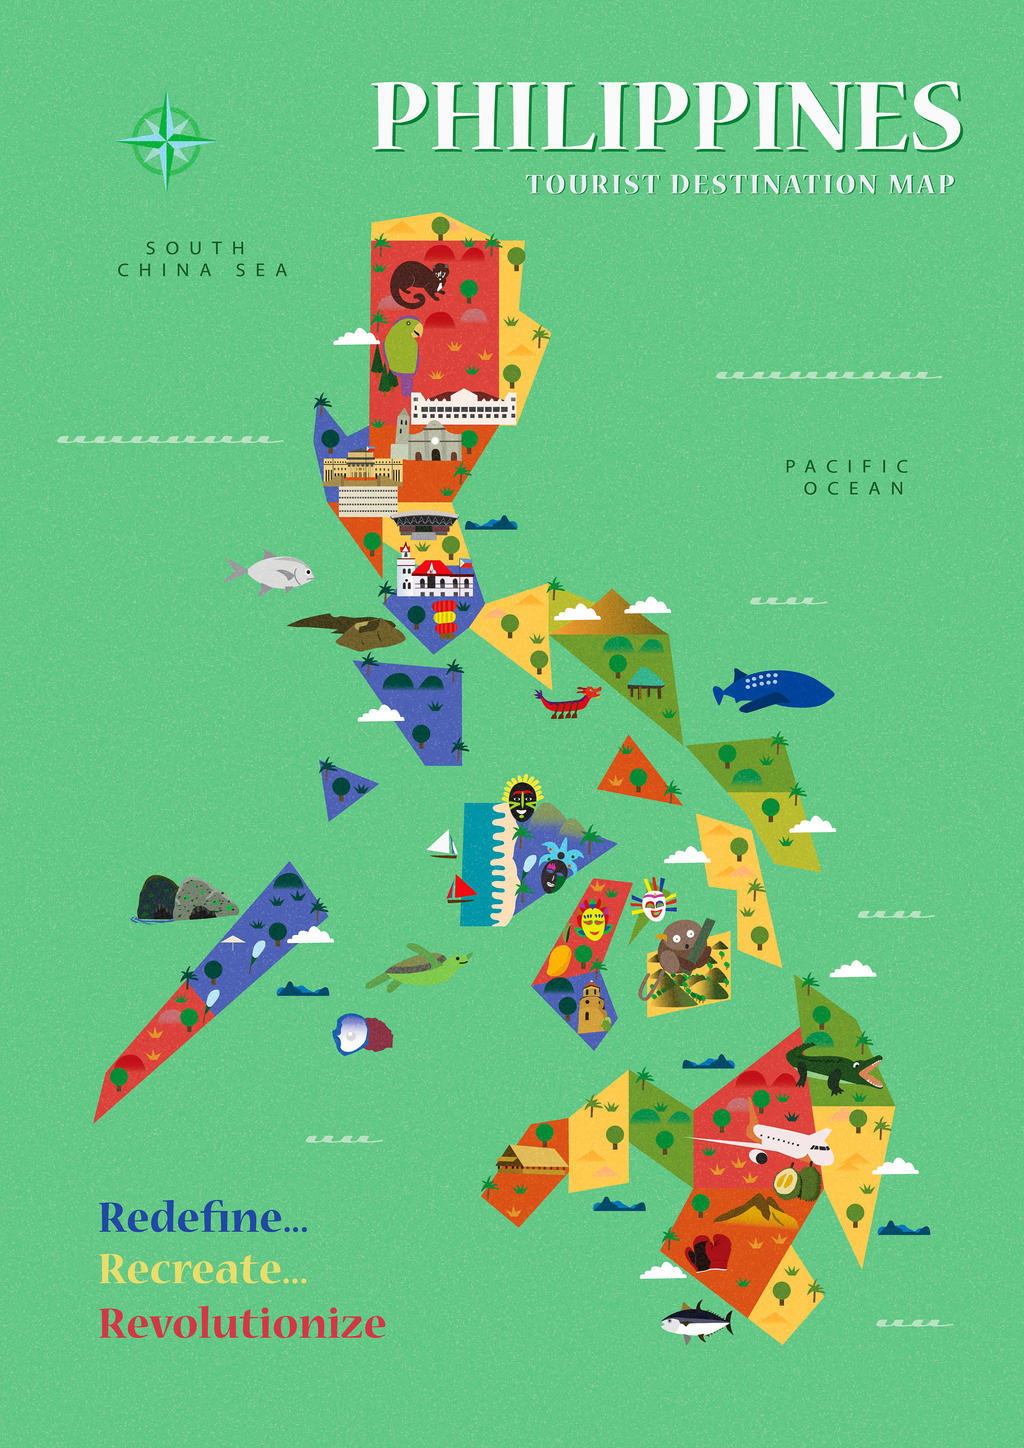 Philippine Tourist Destination Map By Arronglyn On Deviantart | Hot Sex ...